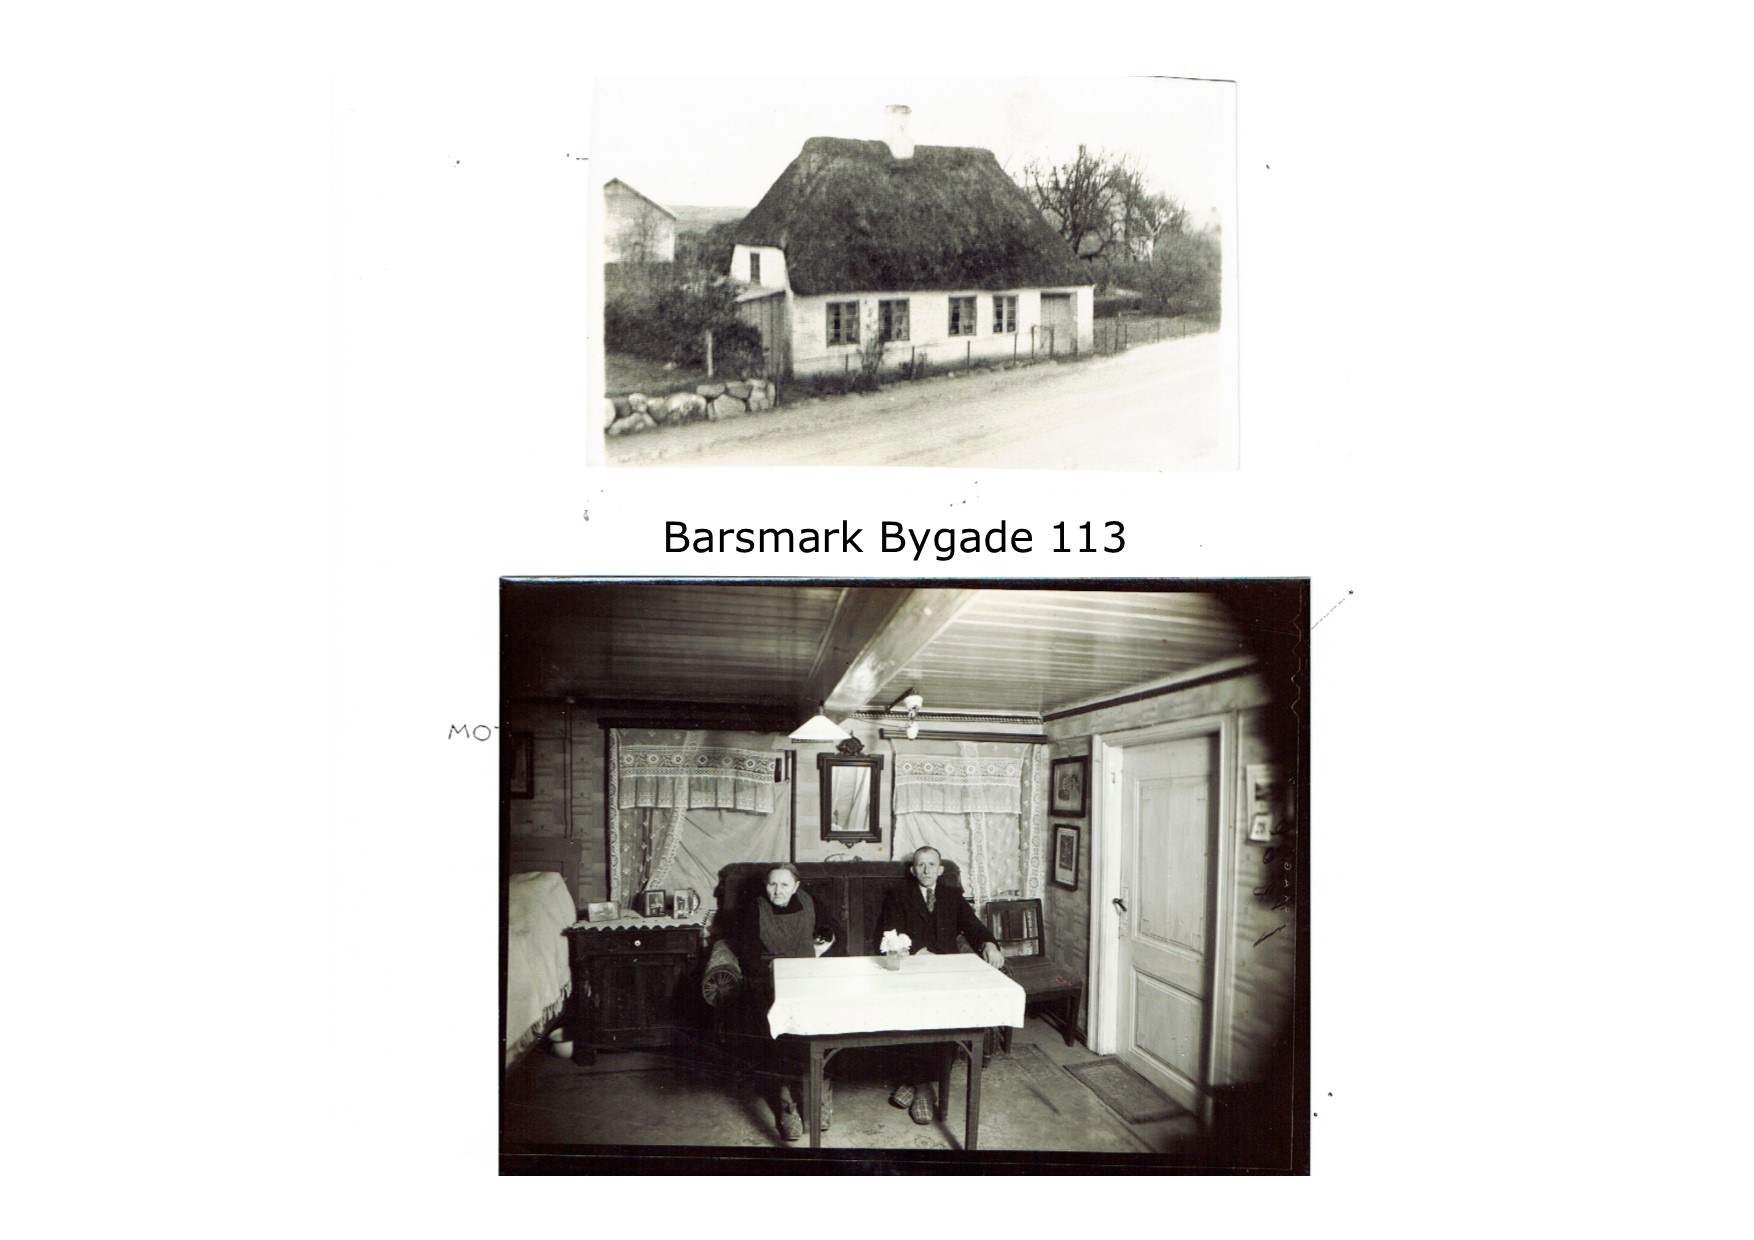 Barsmark Bygade 113 